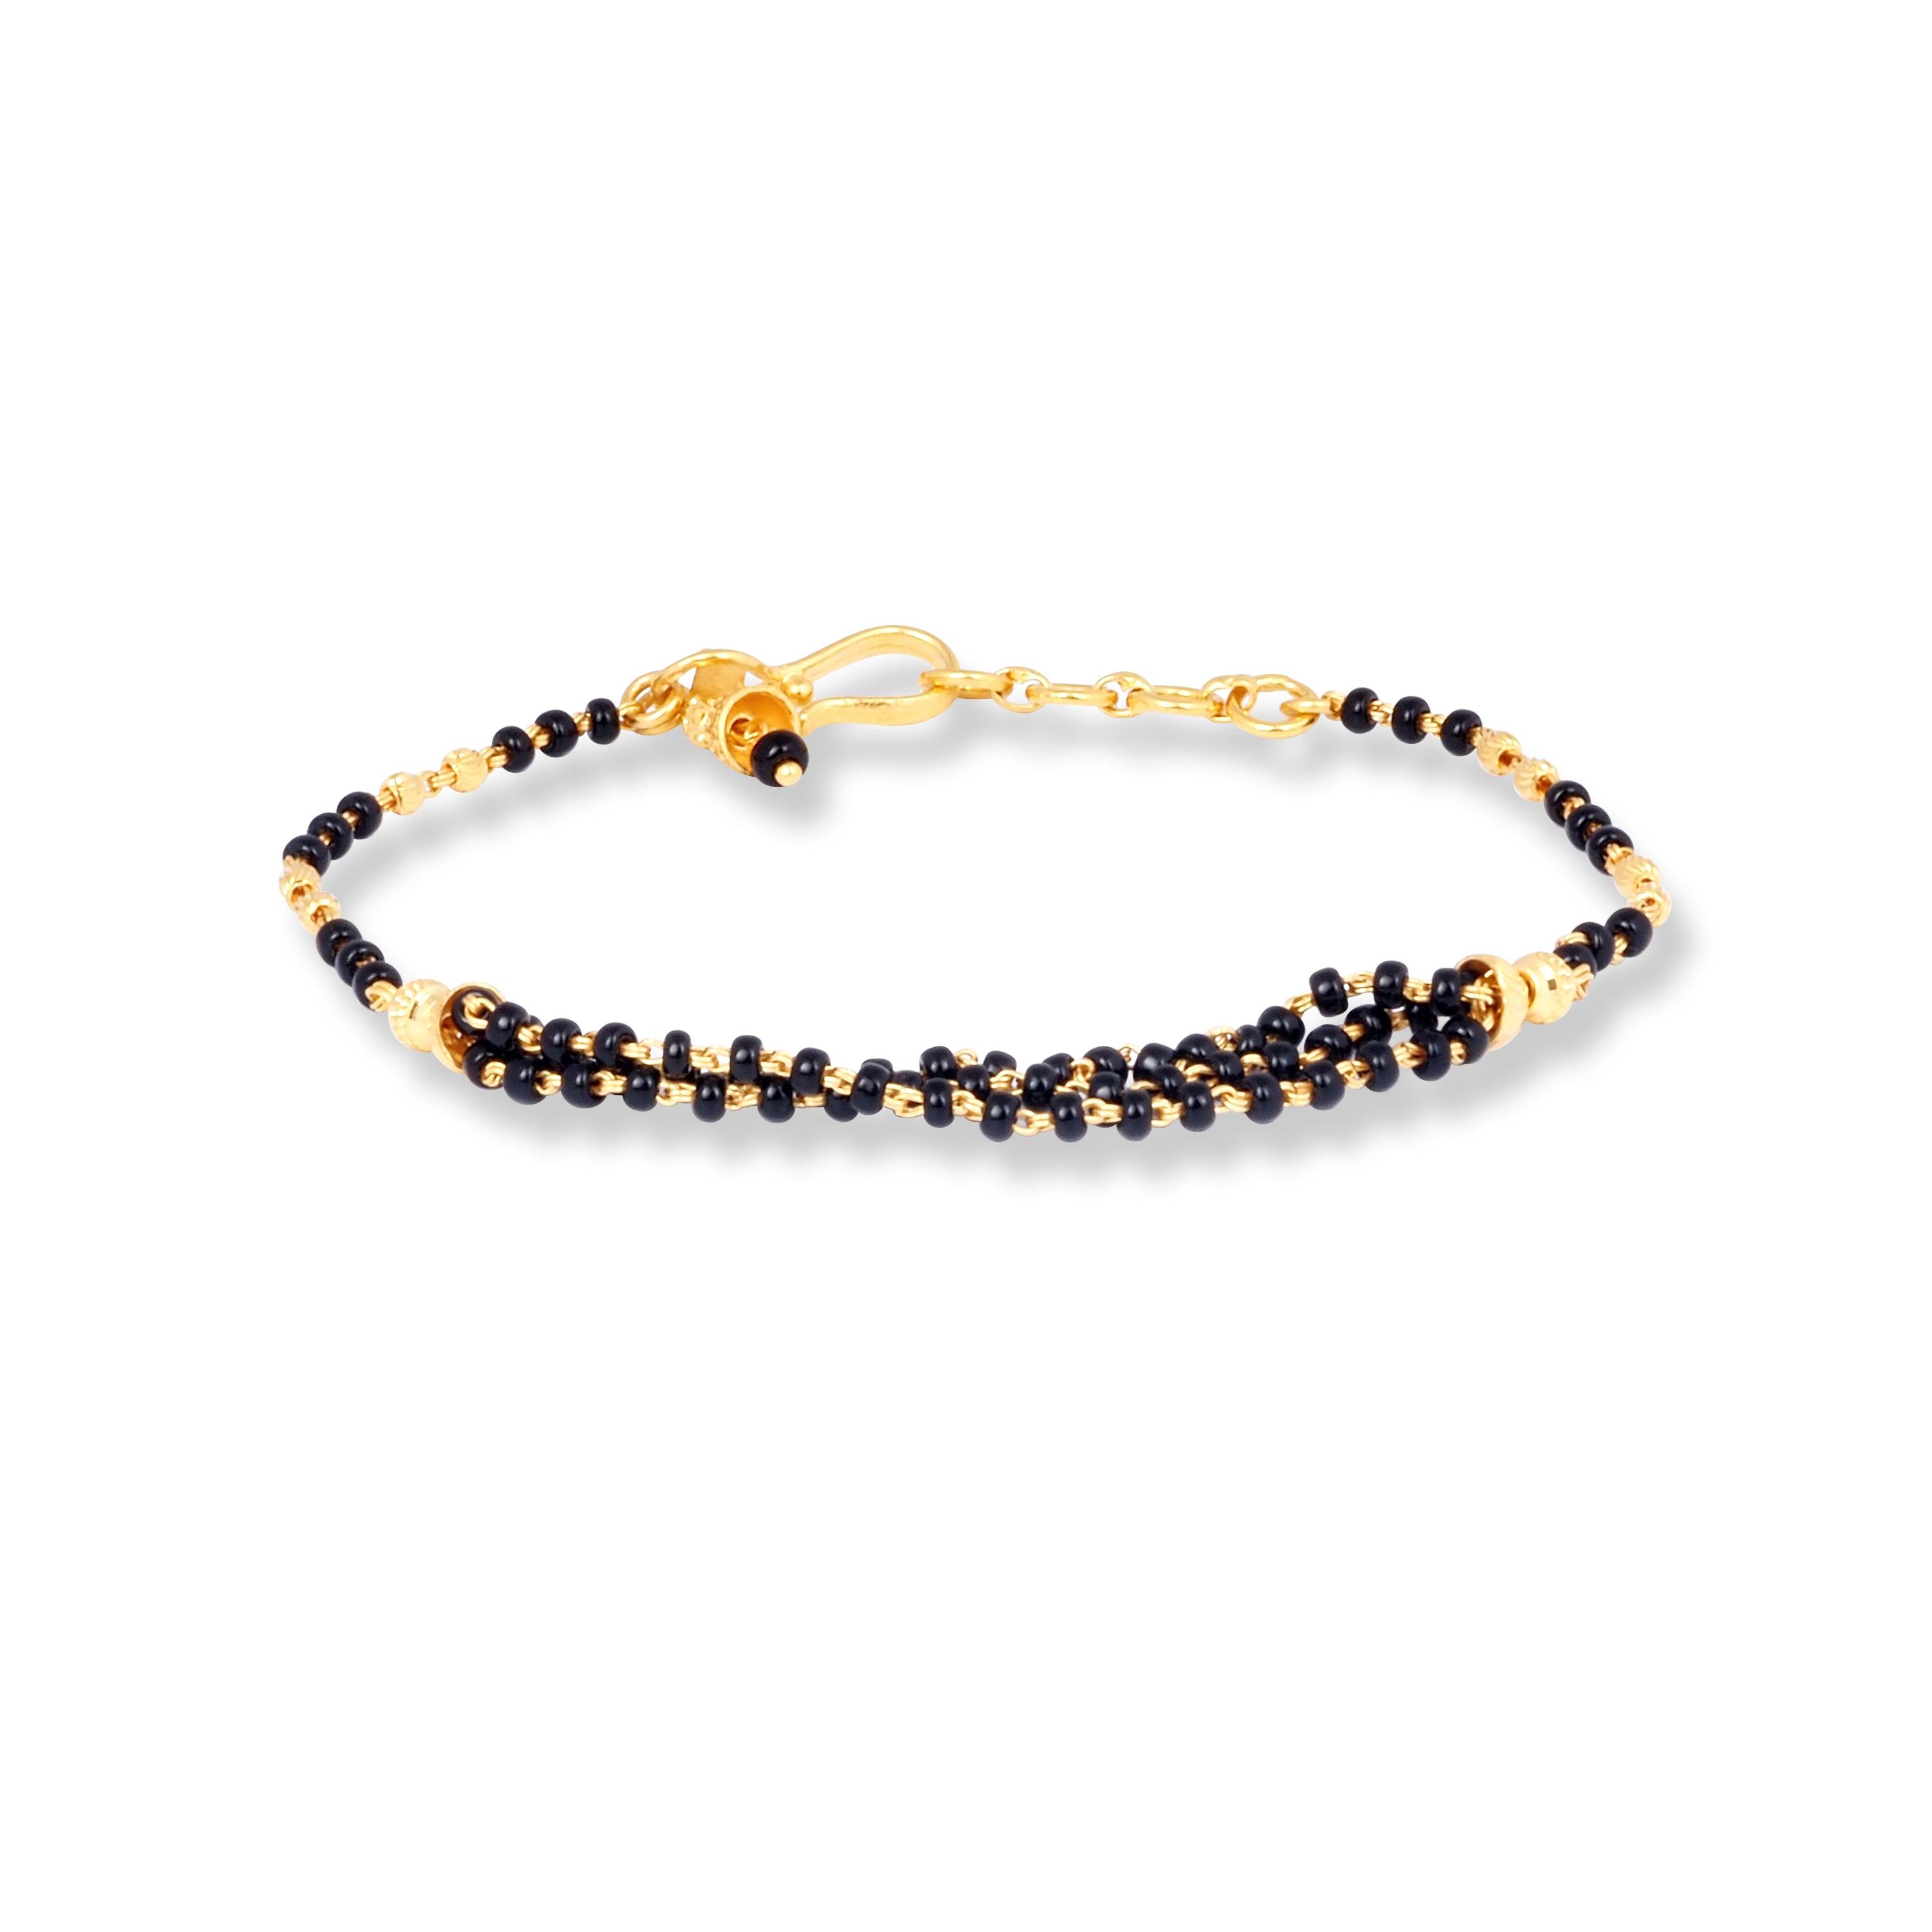 22ct Gold Ladies Bracelet with Hematite & Diamond Cutting Bead Design with U Hook Clasp (4.2g) LBR-7144 - Minar Jewellers